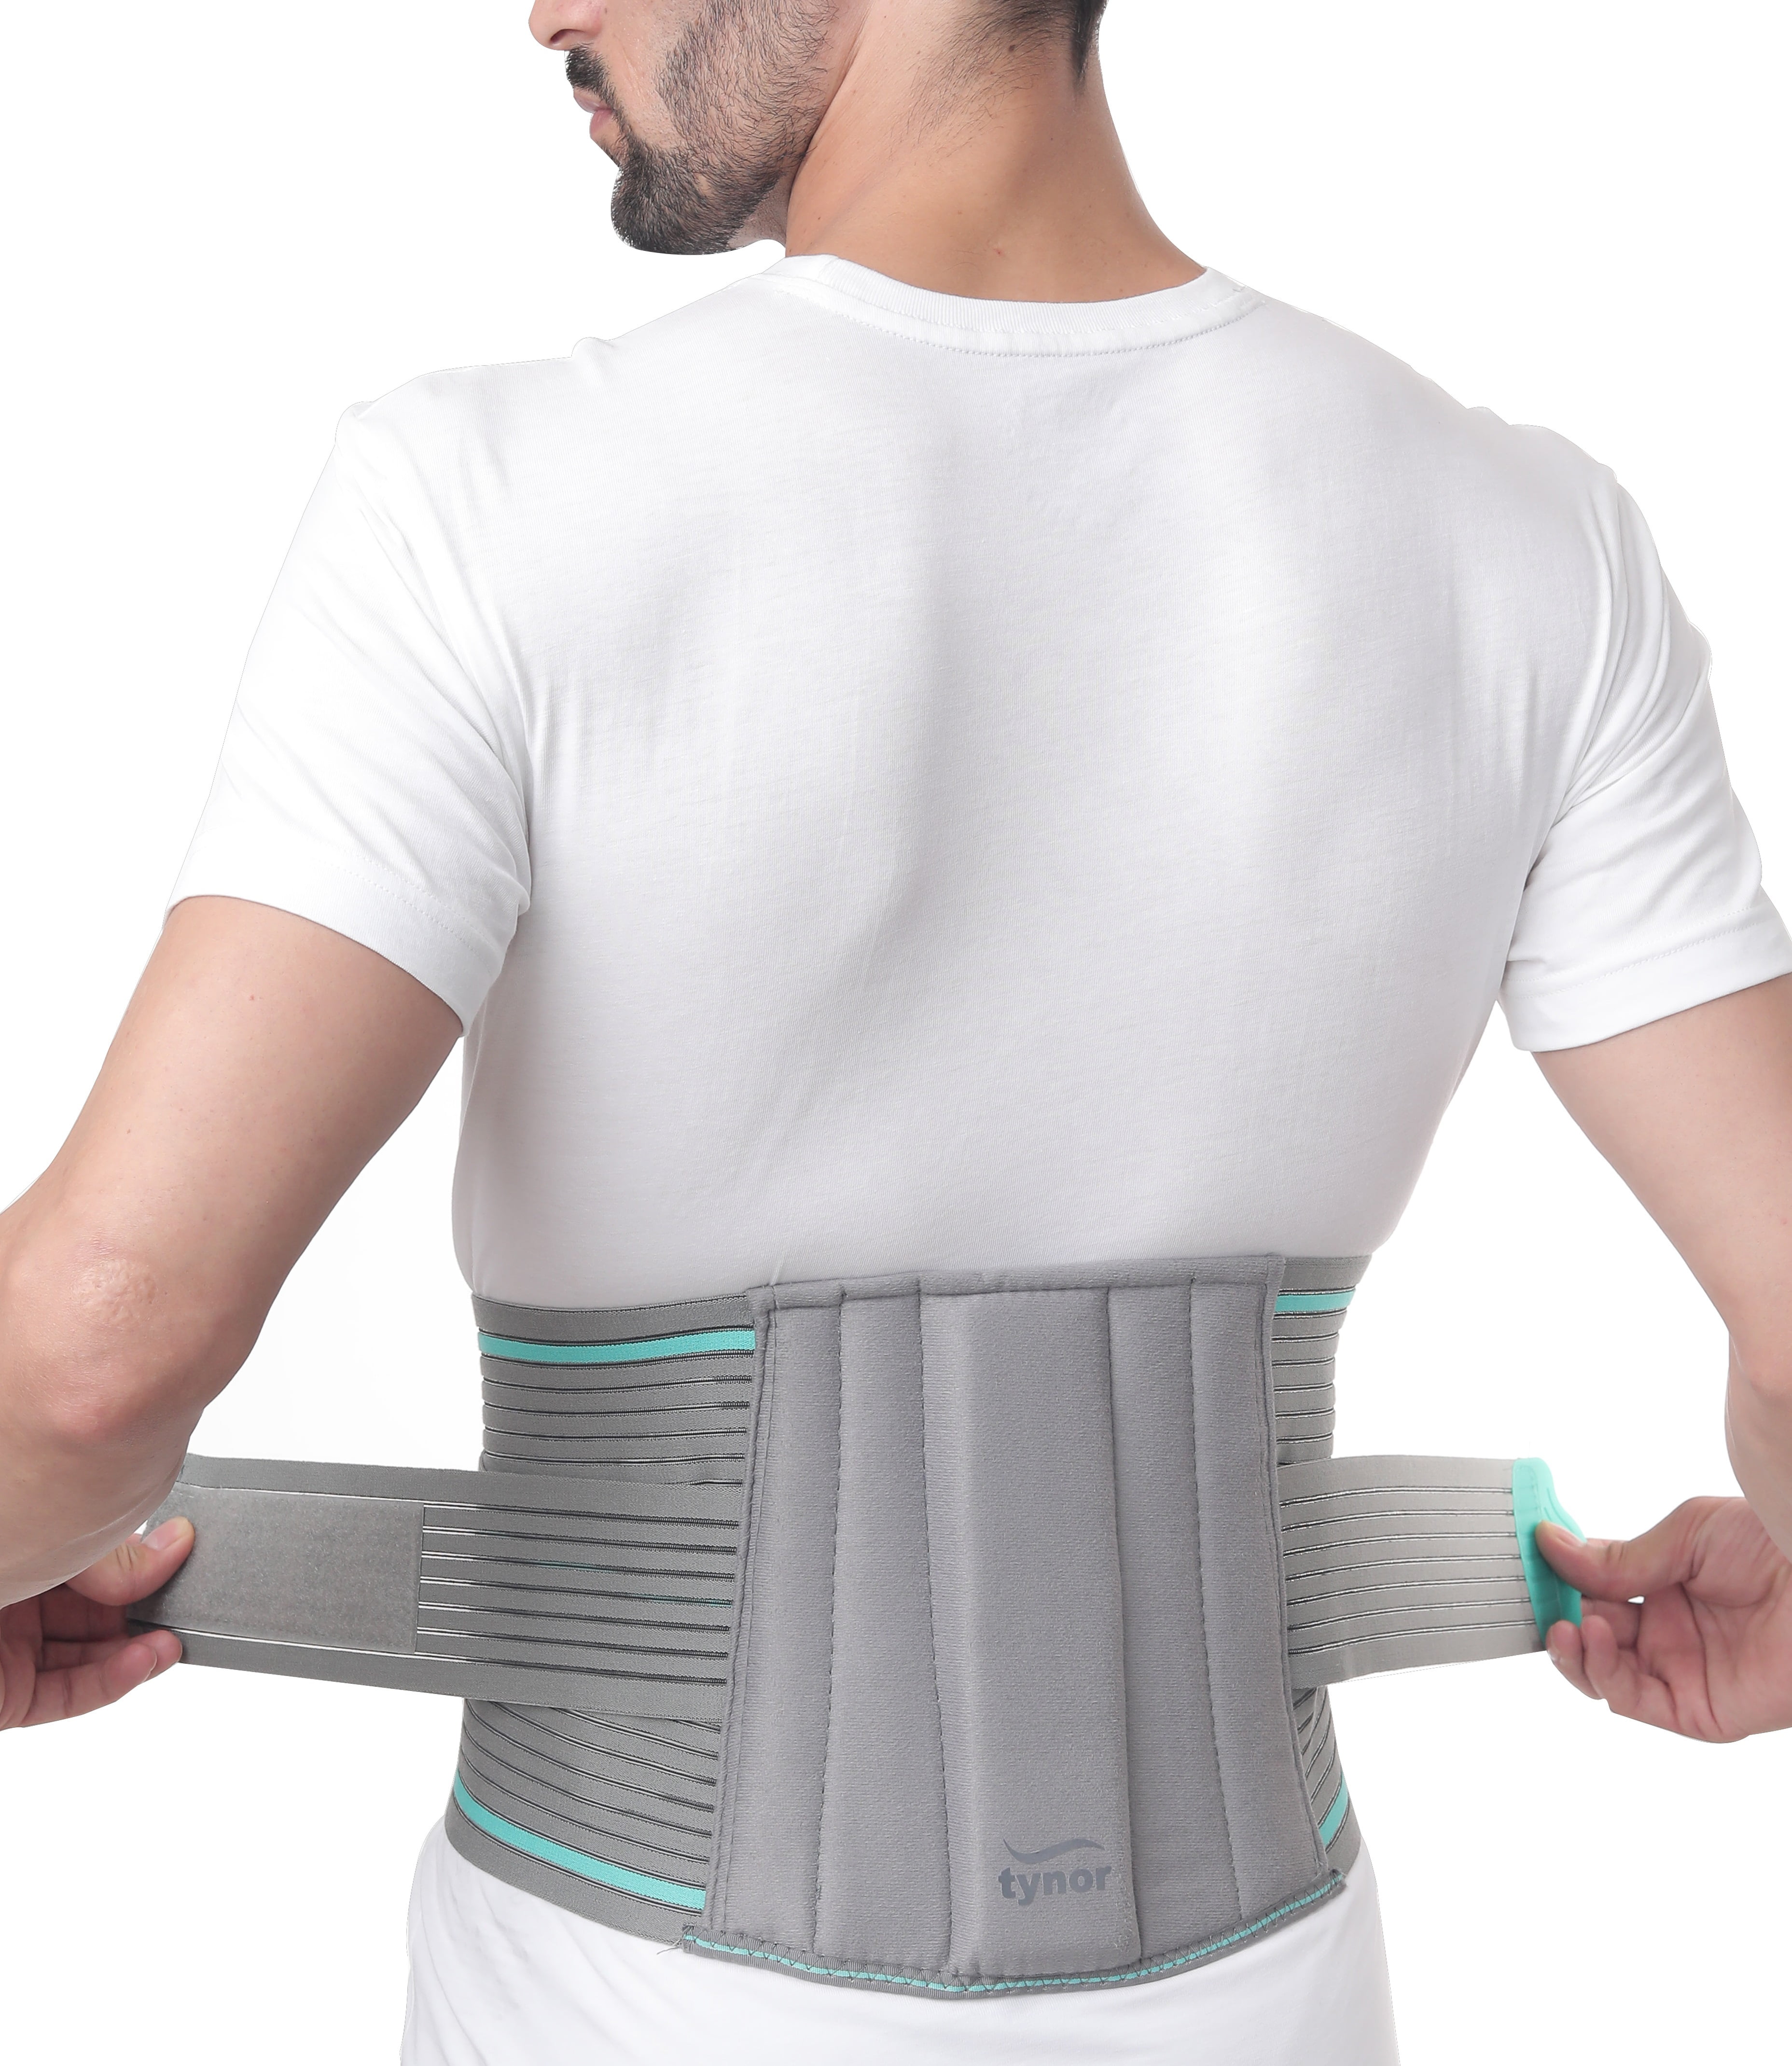 Tynor Posture Corrector for Women & Men Adjustable Back